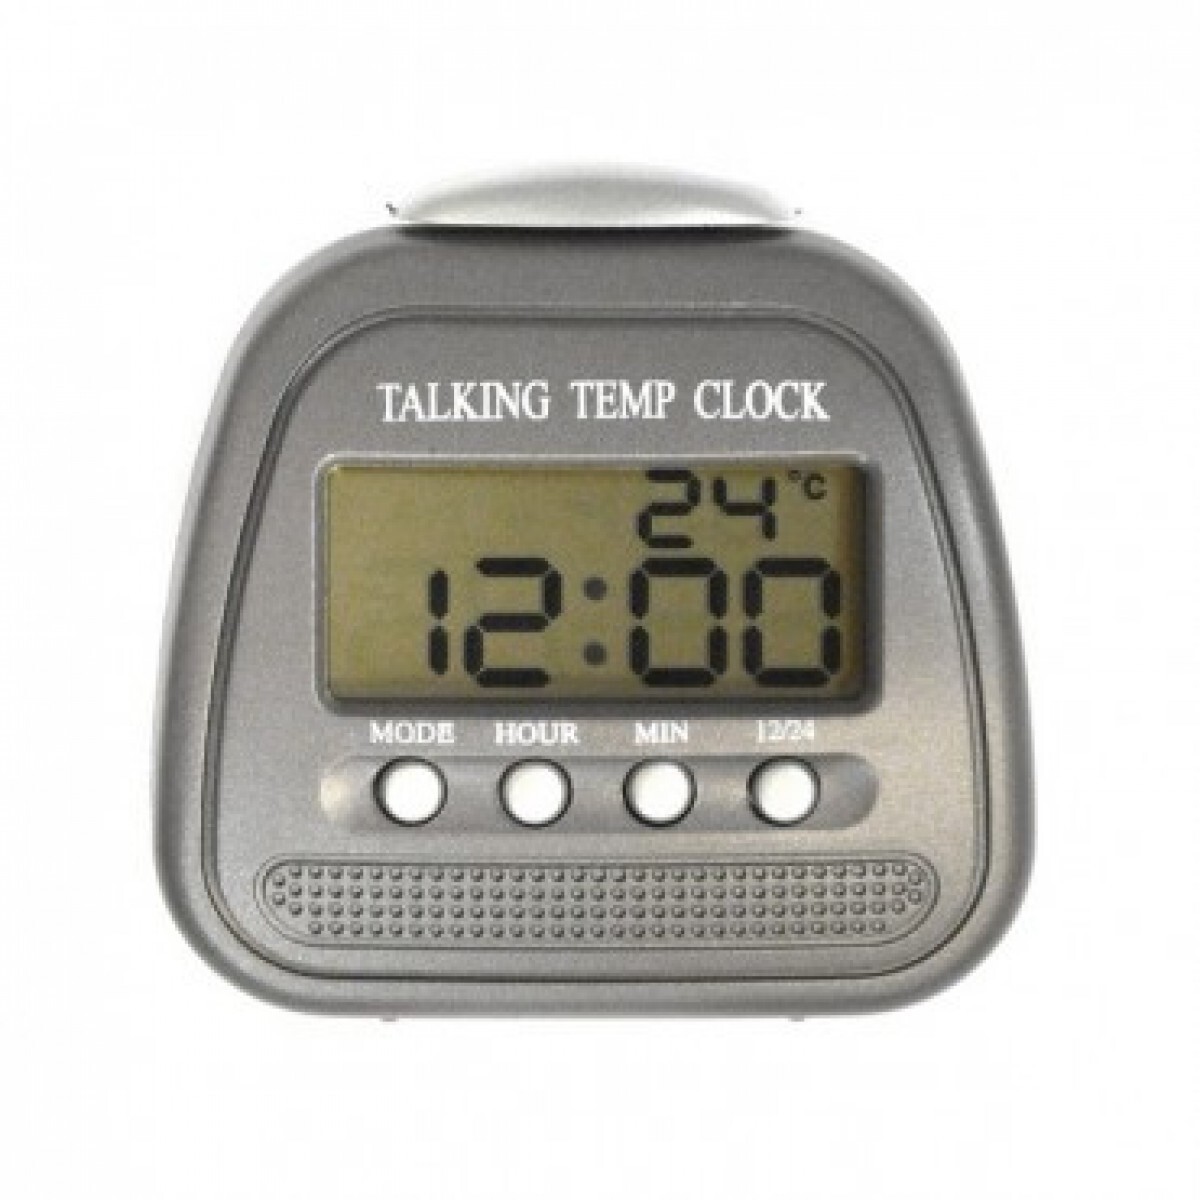 Как настроить говорящие часы. Часы sh-210c говорящие. Говорящие часы с будильником Hangzhou Qianxin Electronic co sh-210c инструкция. Часы будильник Талкинг инструкция. Китайские говорящие часы.